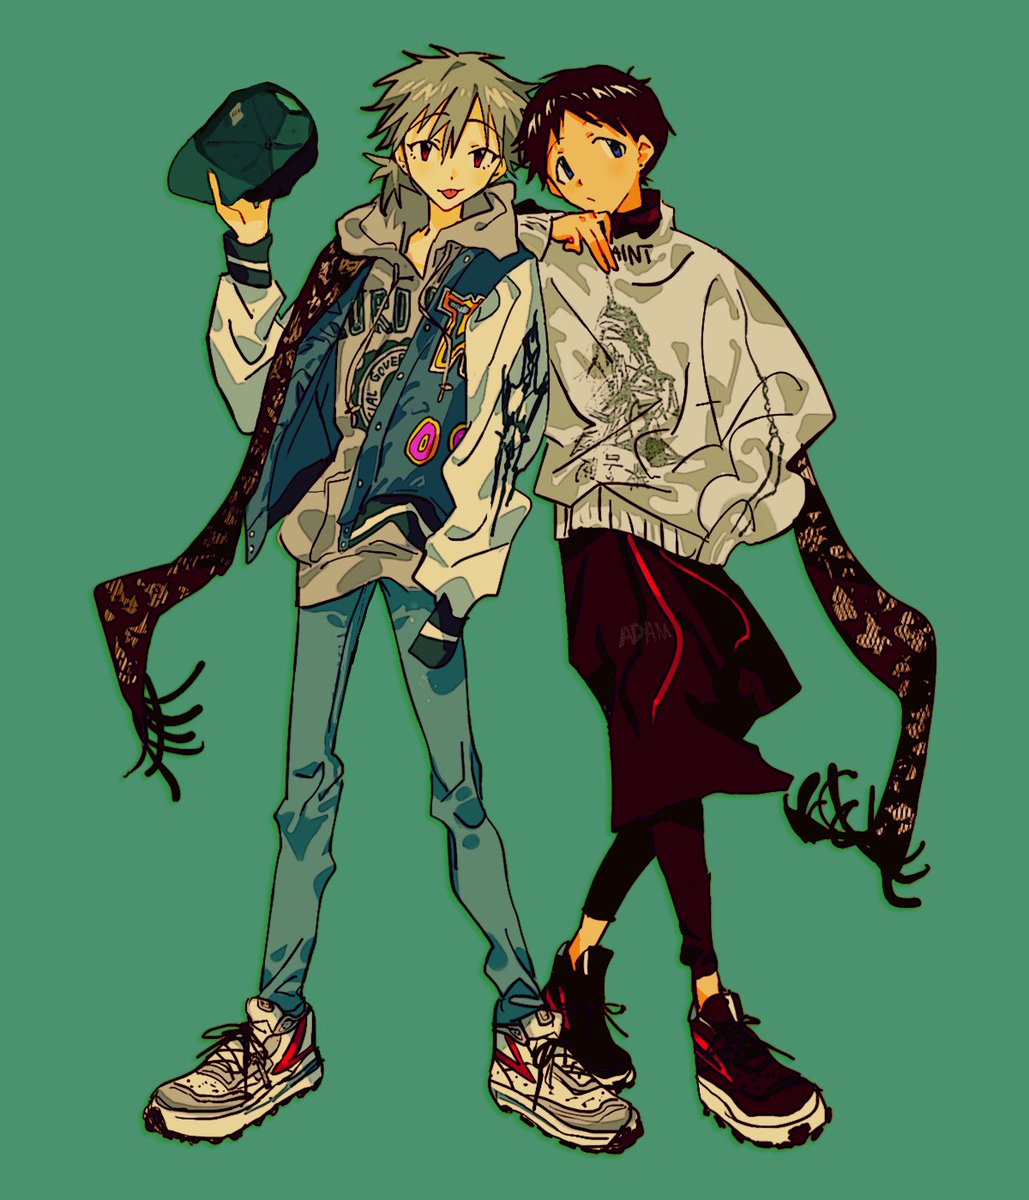 ikari shinji ,nagisa kaworu 2boys multiple boys male focus pants green background hat grey hair  illustration images